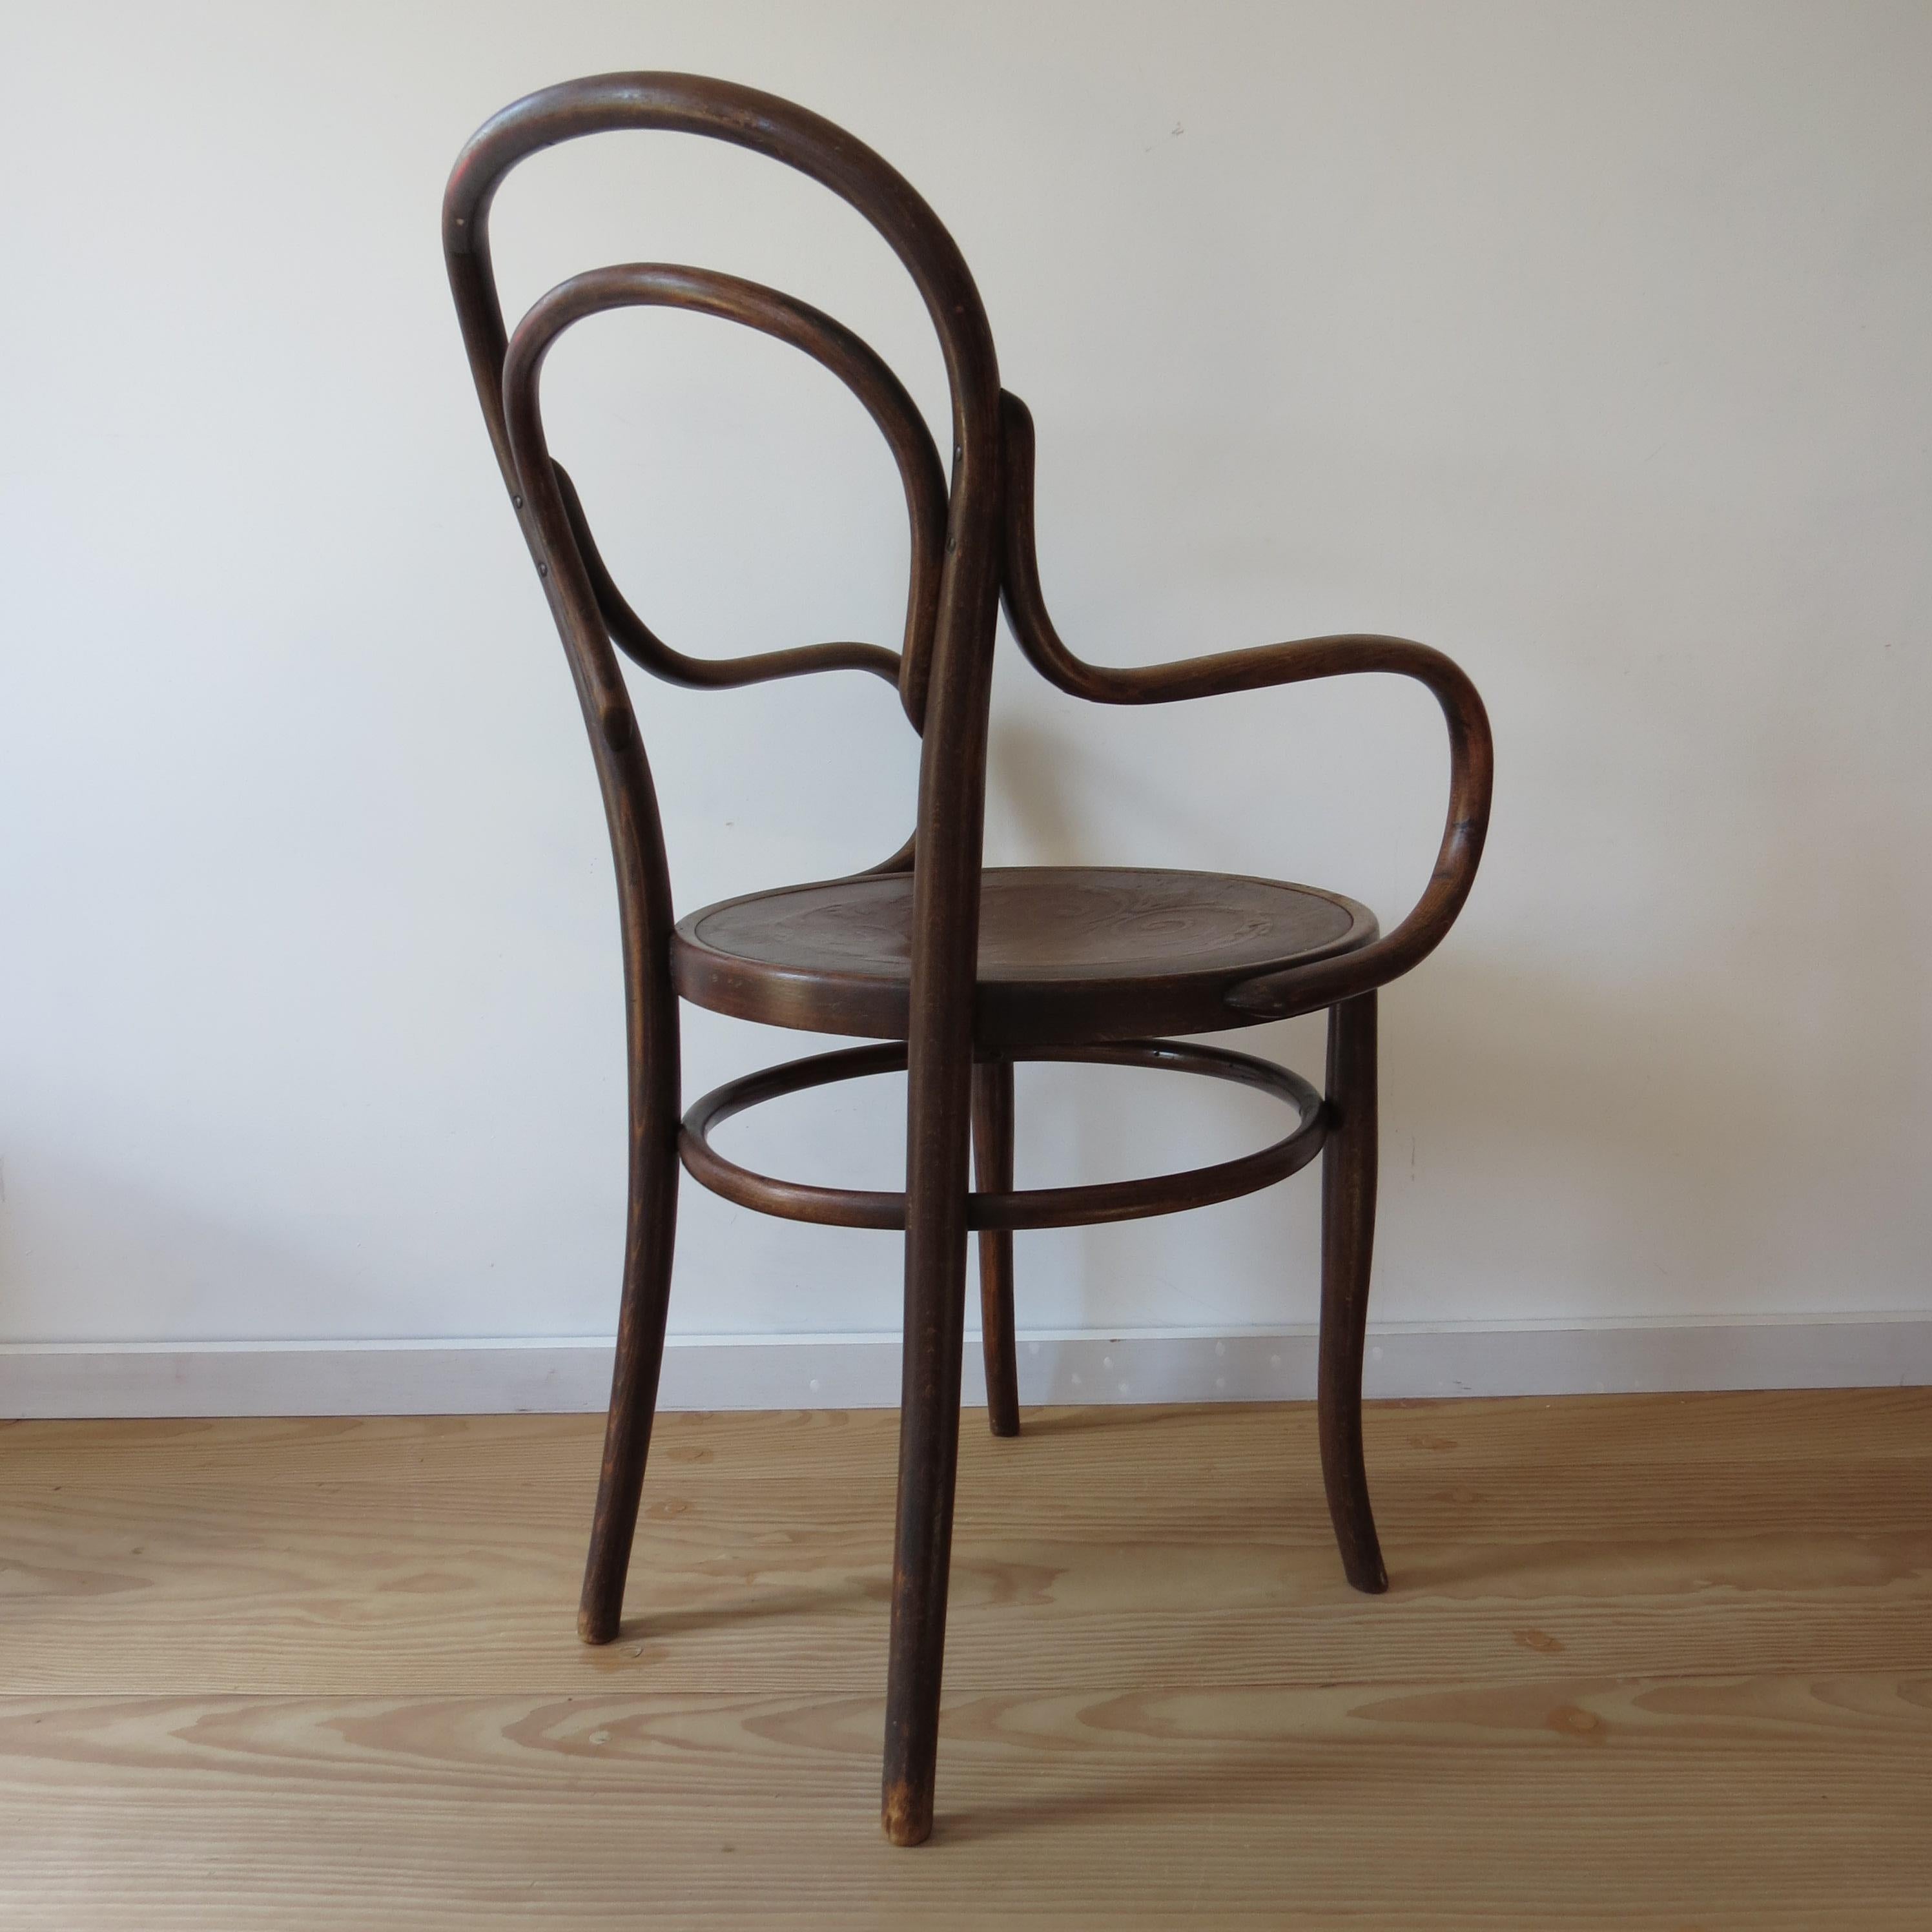 Beech Antique Bentwood Chair No 14 by Thonet 19th Century Art Nouveau